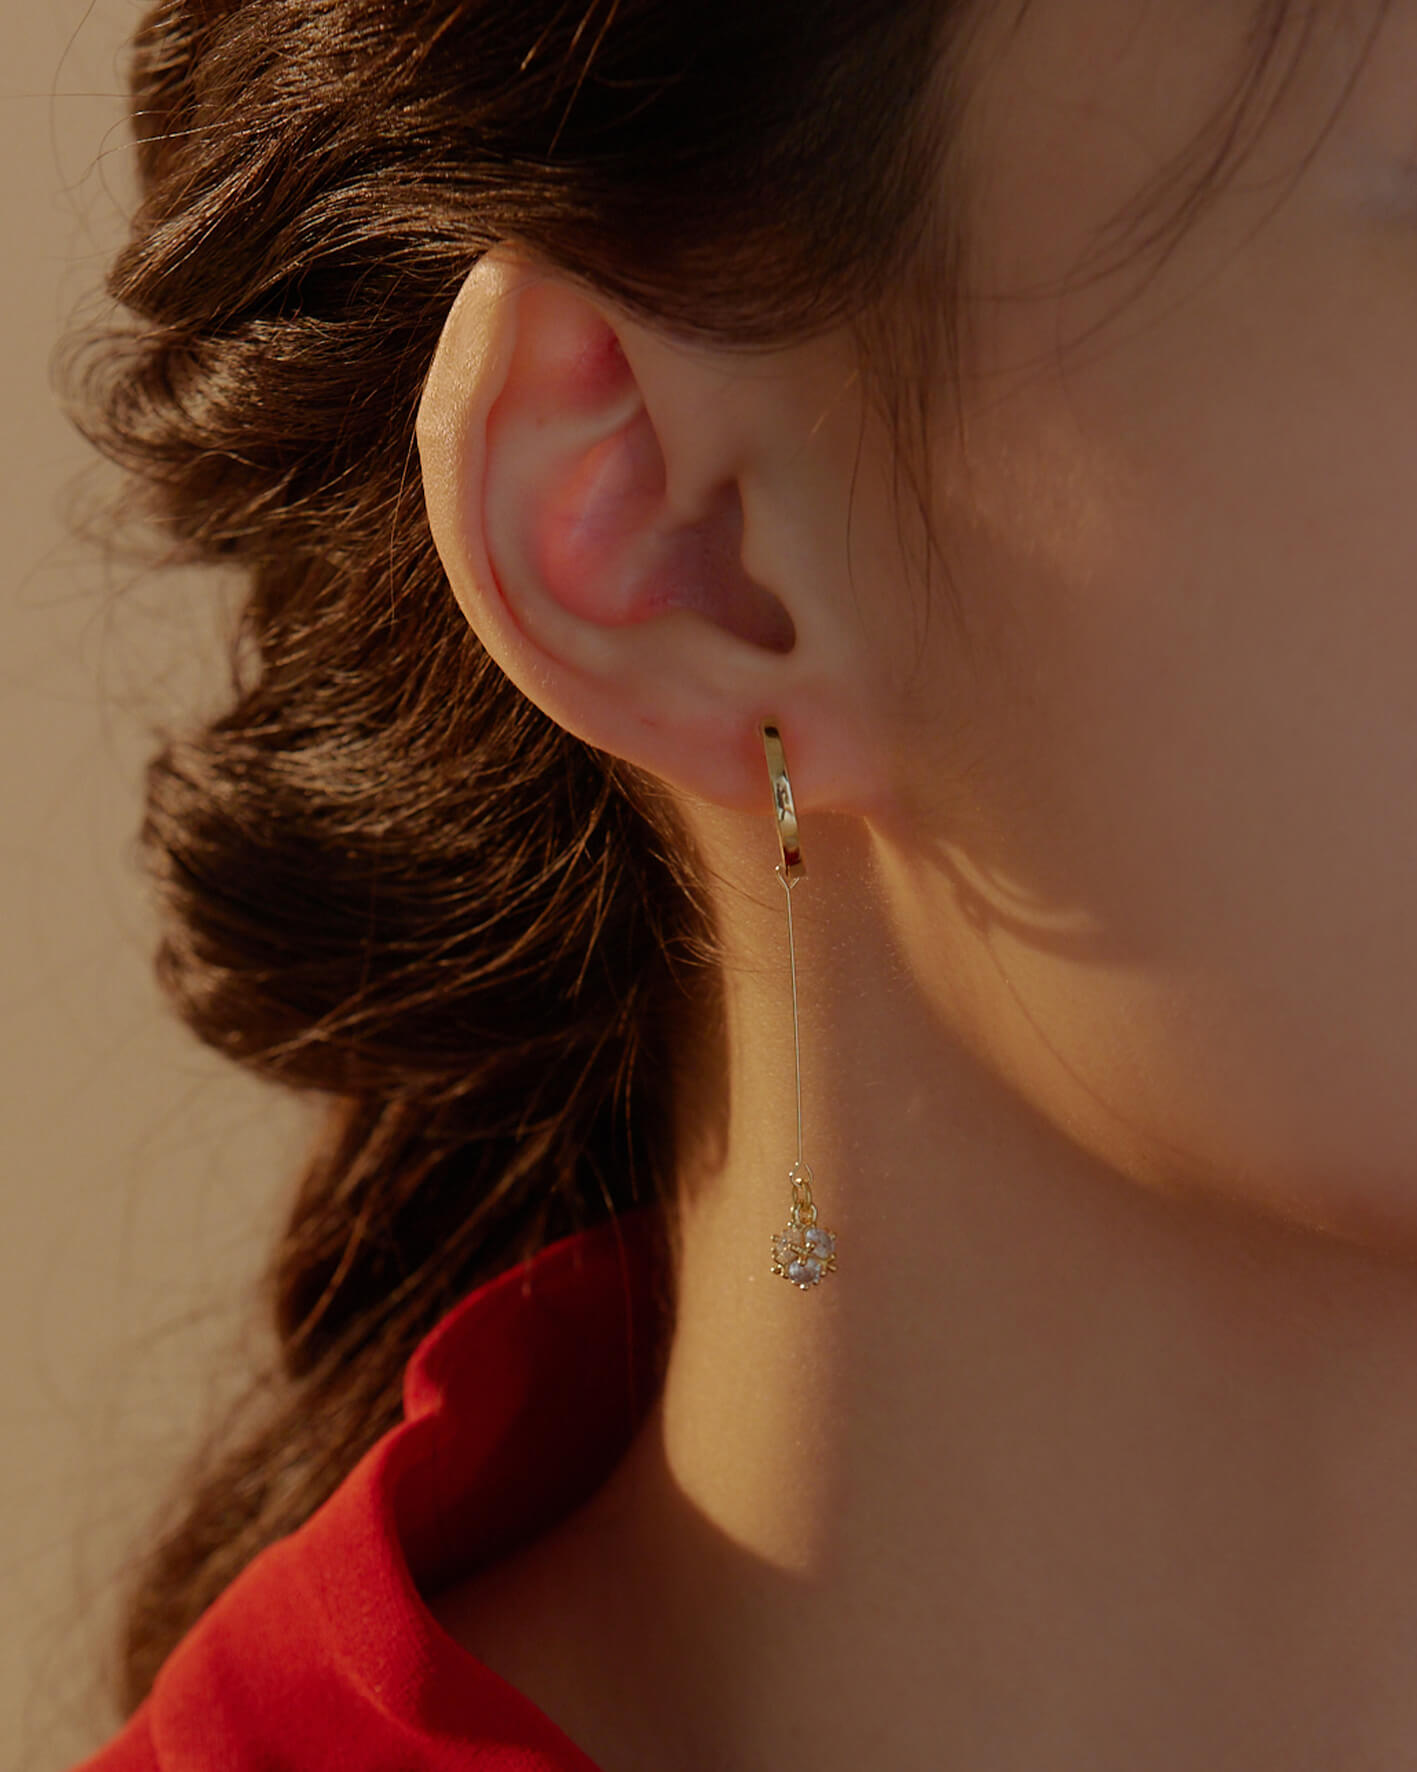 Eco安珂,韓國飾品,韓國耳環,耳針式耳環,矽膠夾耳環,透明耳夾耳環,無痛耳夾耳環,鋯石耳環,垂墜矽膠夾耳環